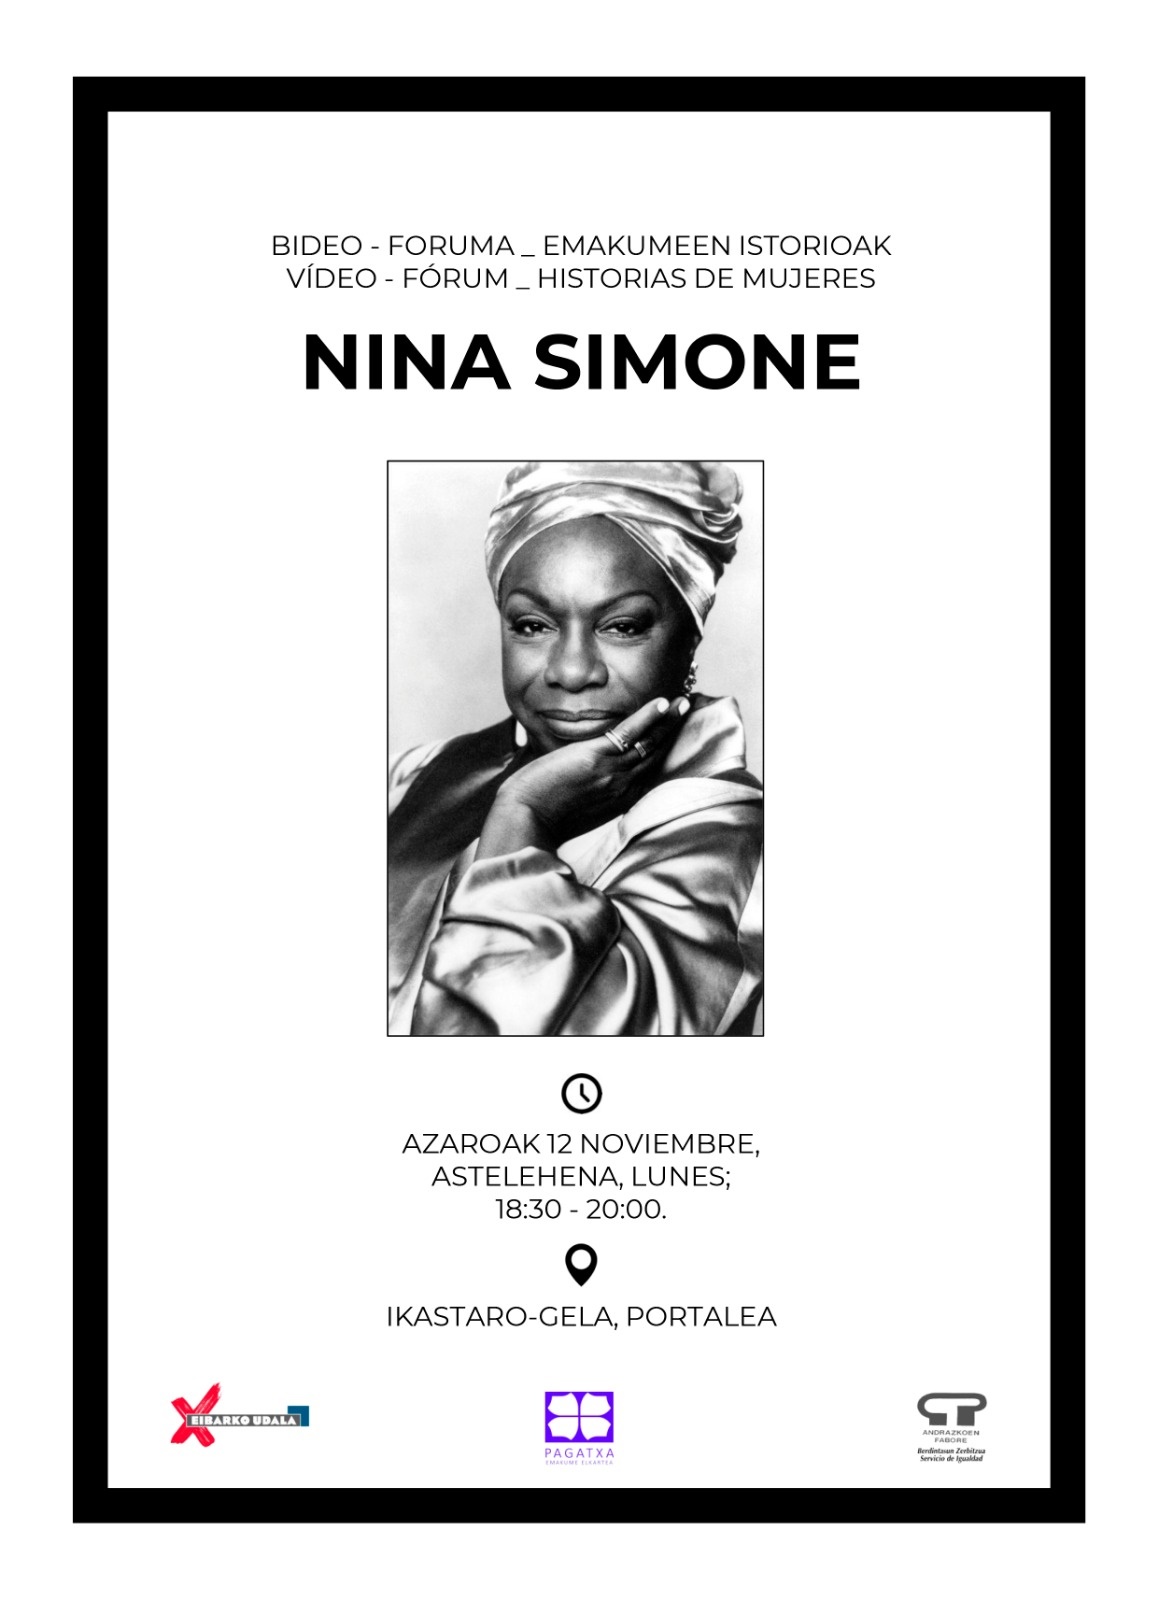 Video Forum Historias de mujeres: Nina Simone 